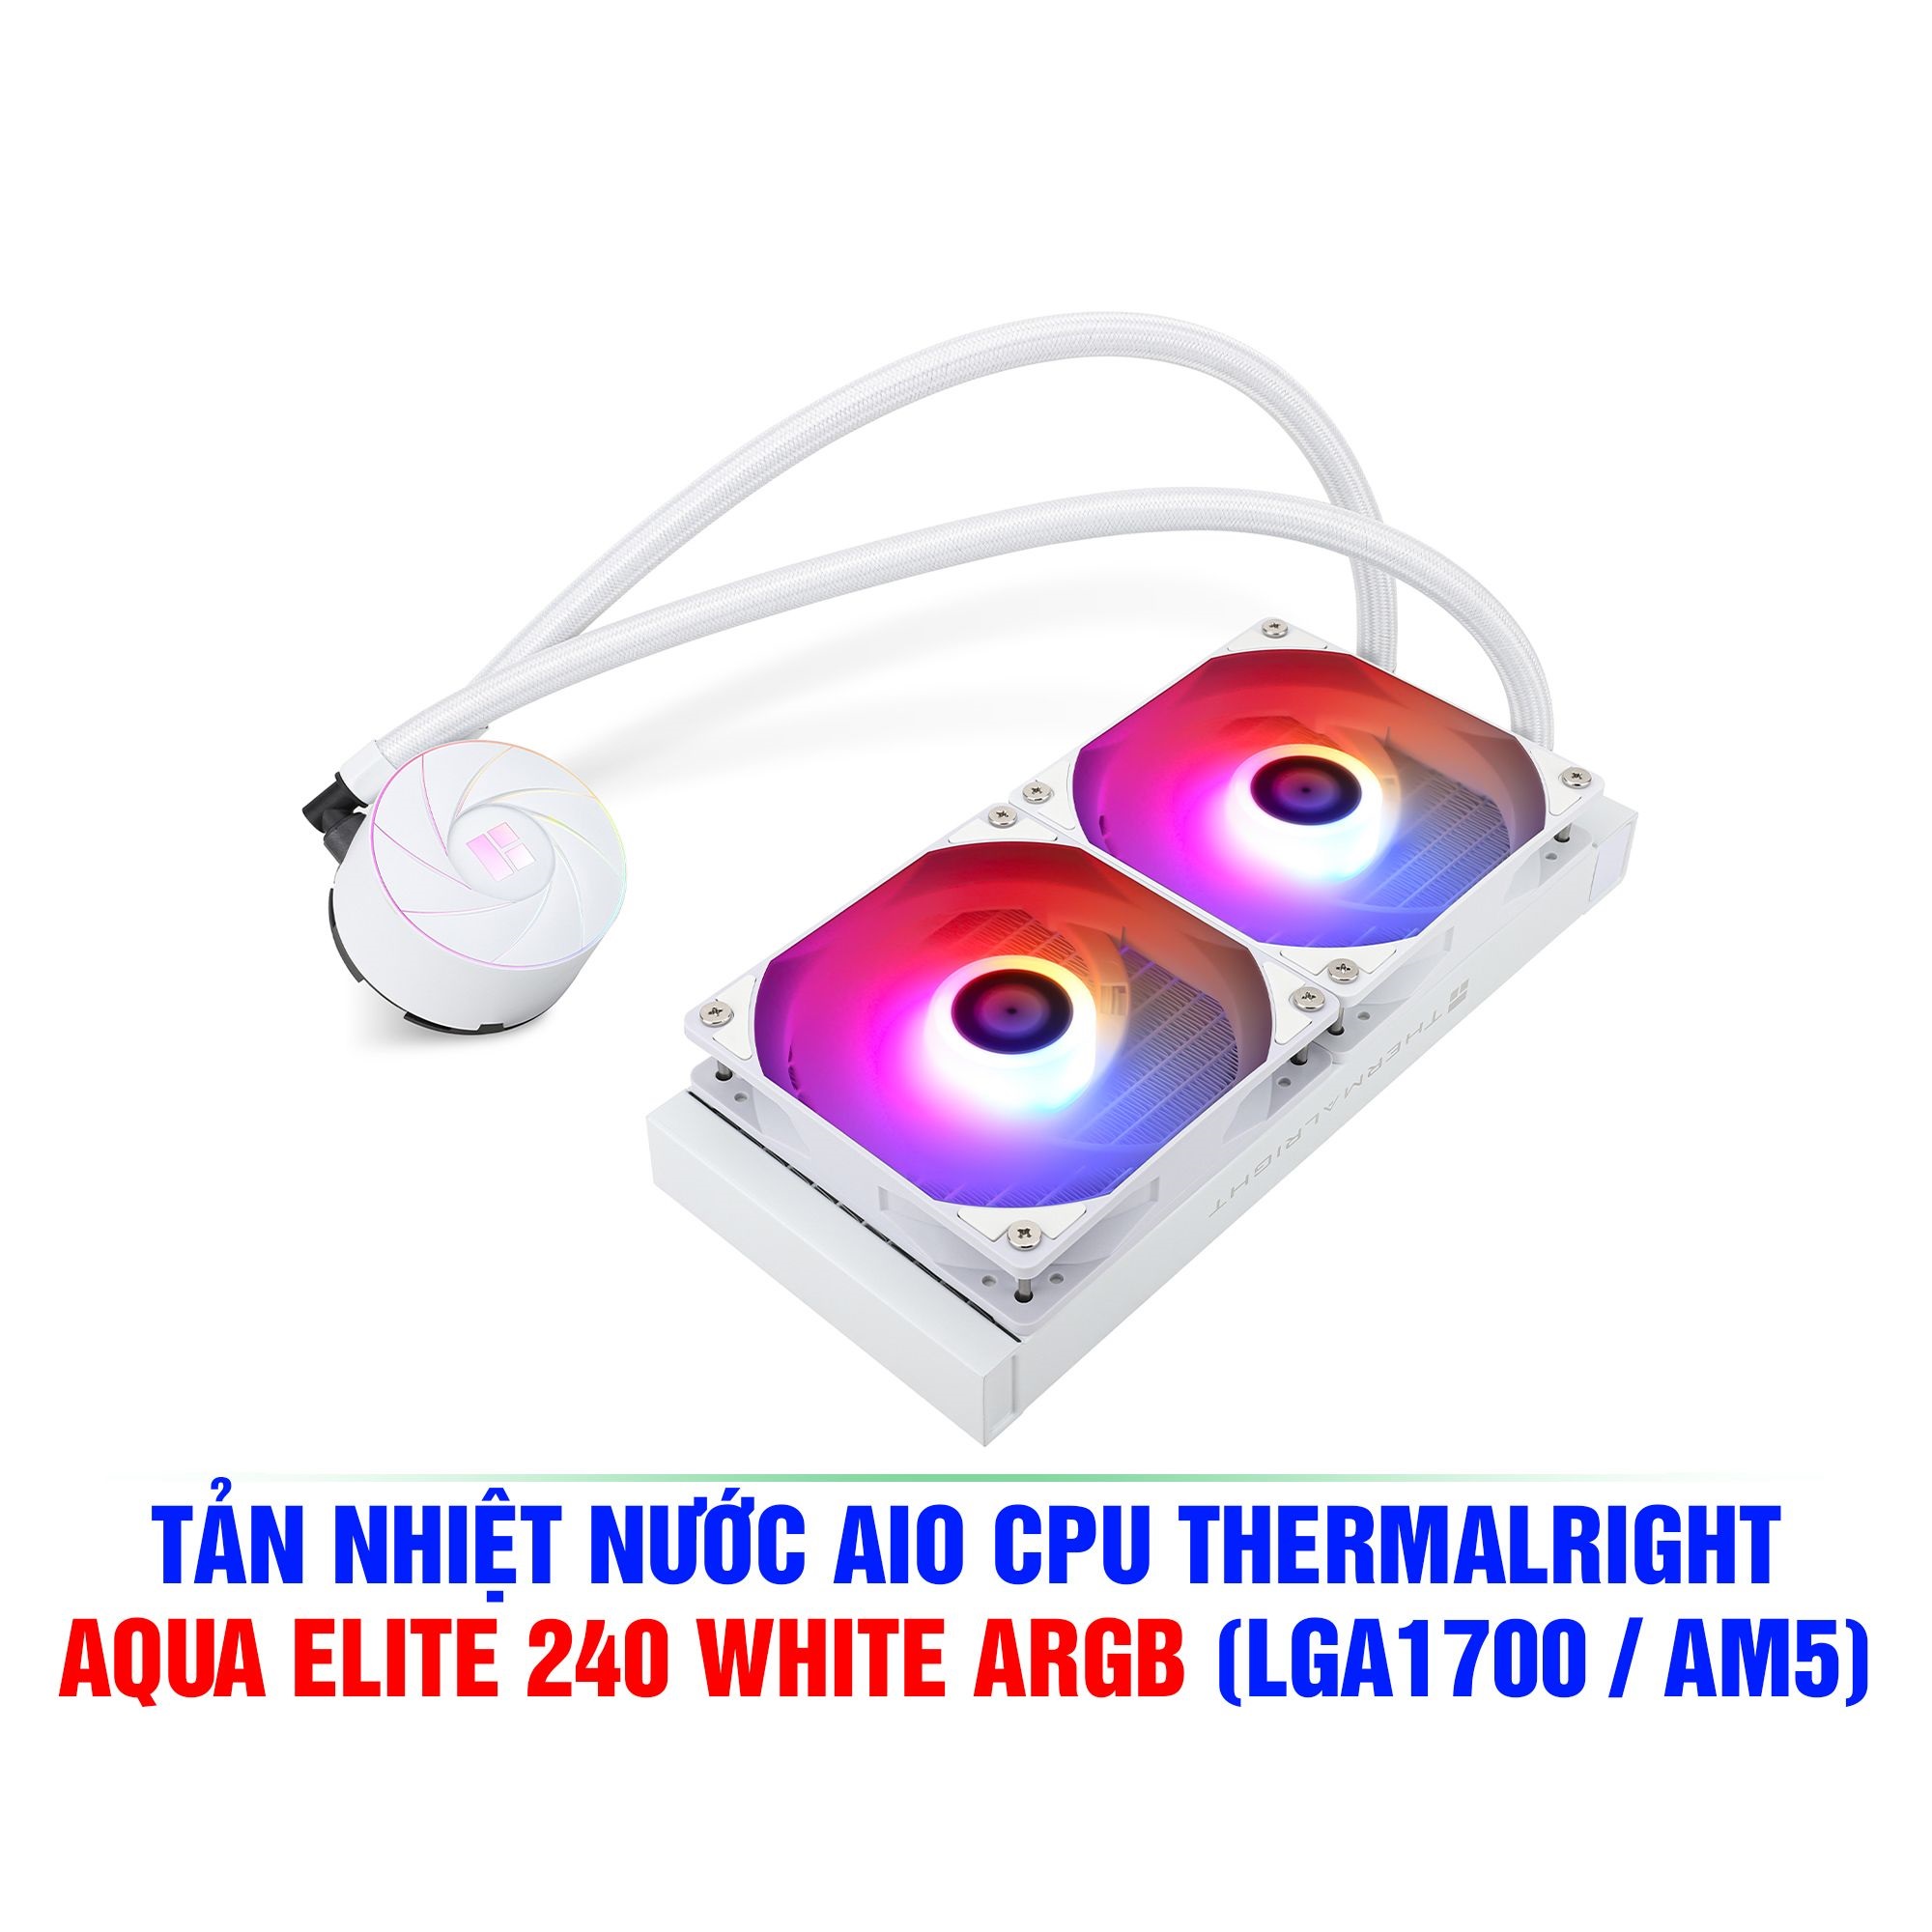 Aqua Elite 240 WHITE ARGB – Thermalright